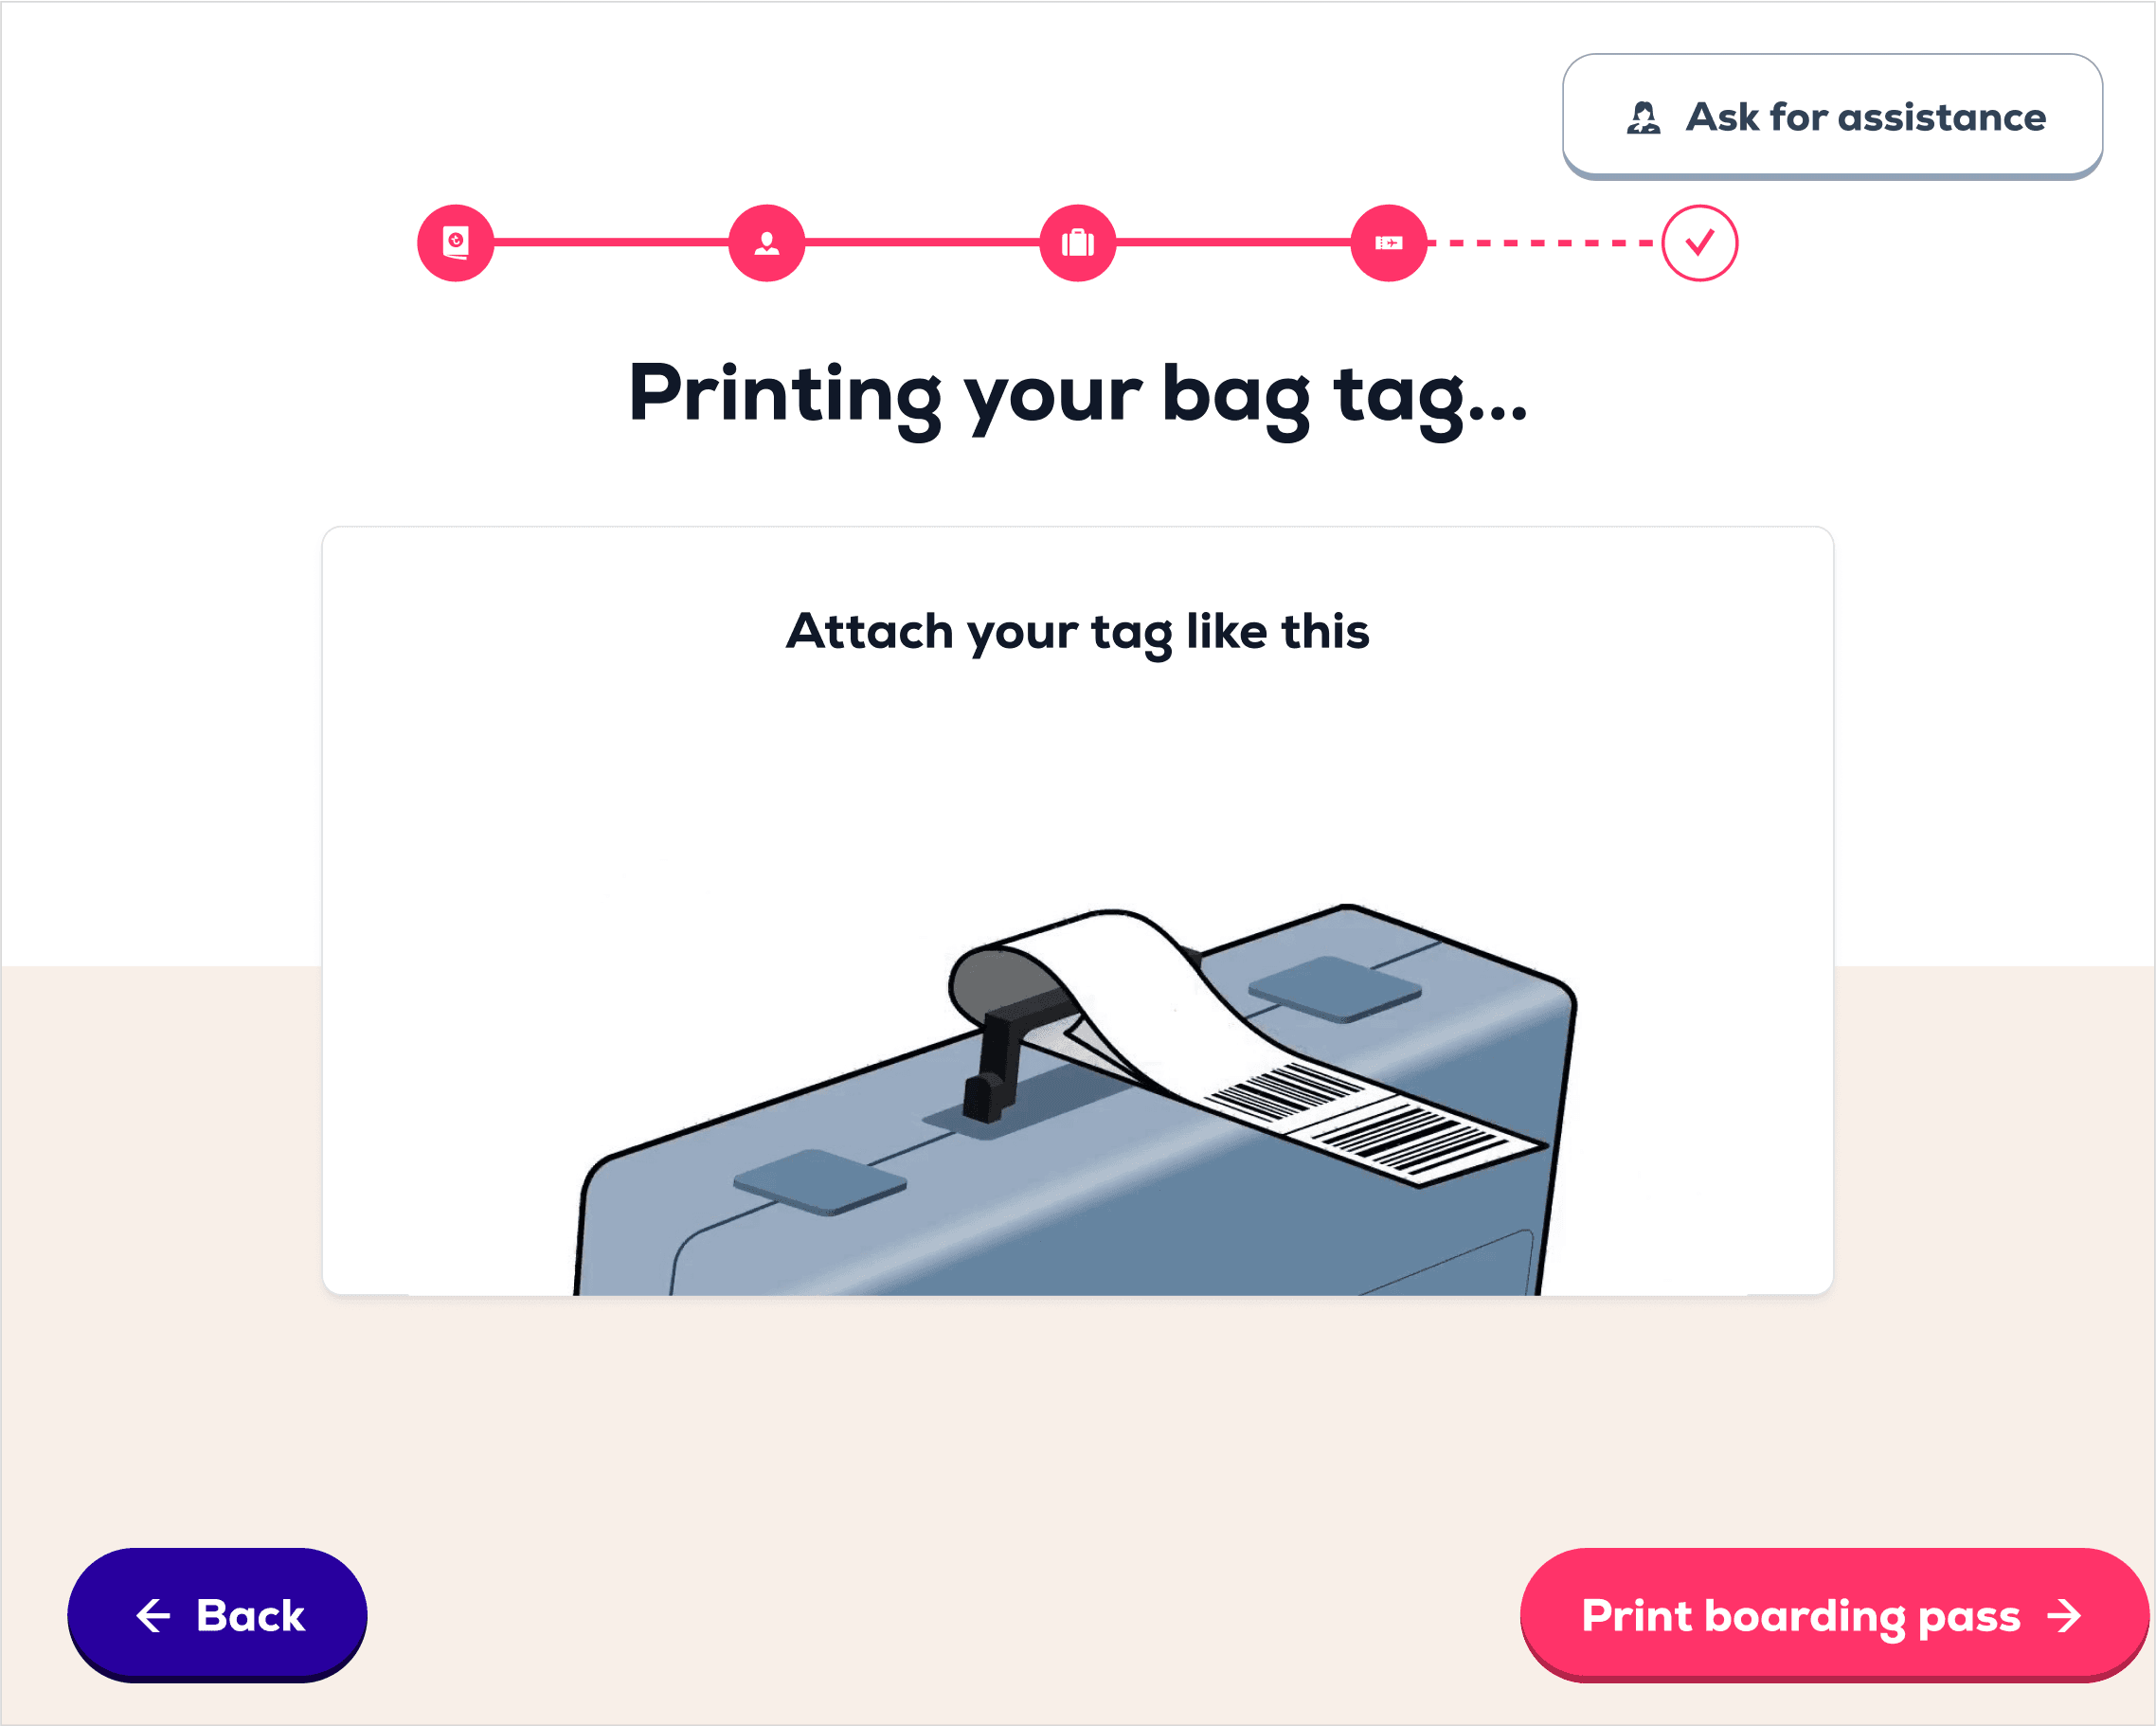 Screen where you print your bag tag